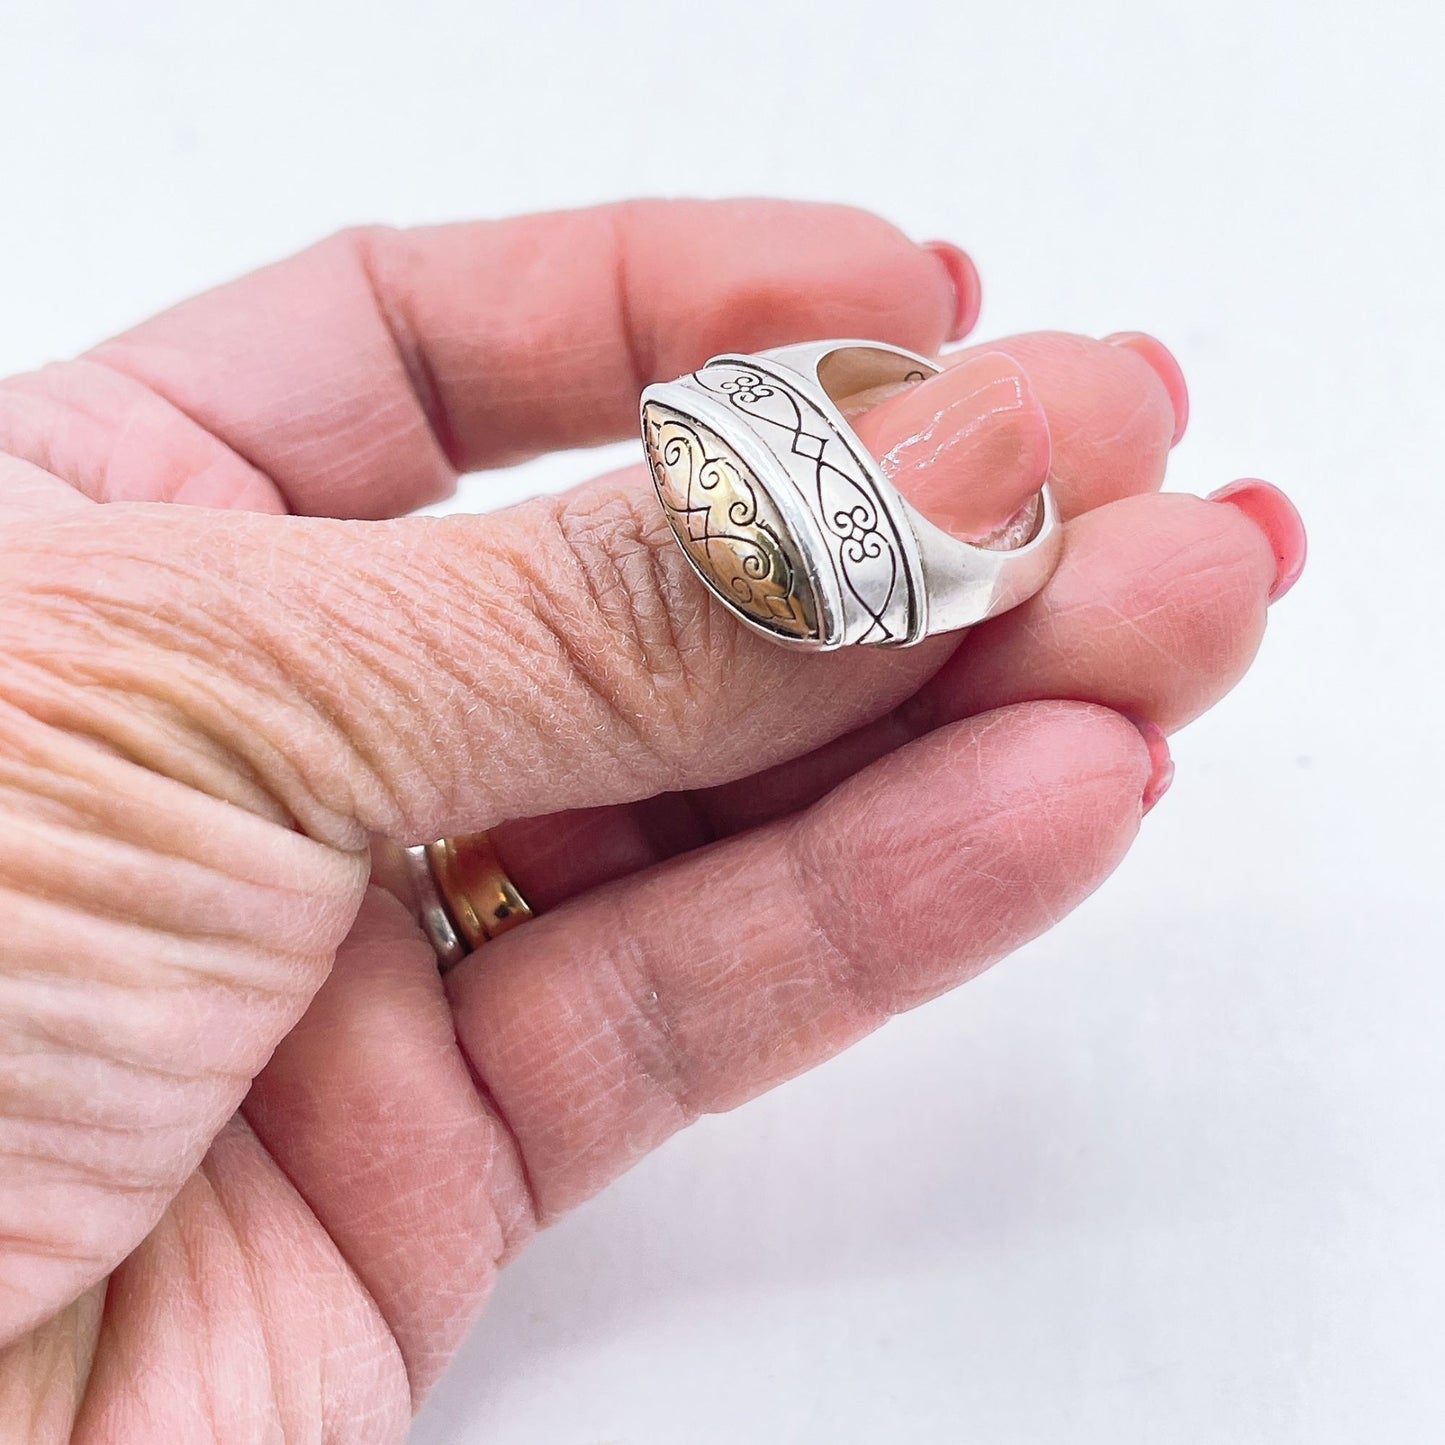 Brighton 925 & Gold Vintage Rare Find Ring - Size 6.5